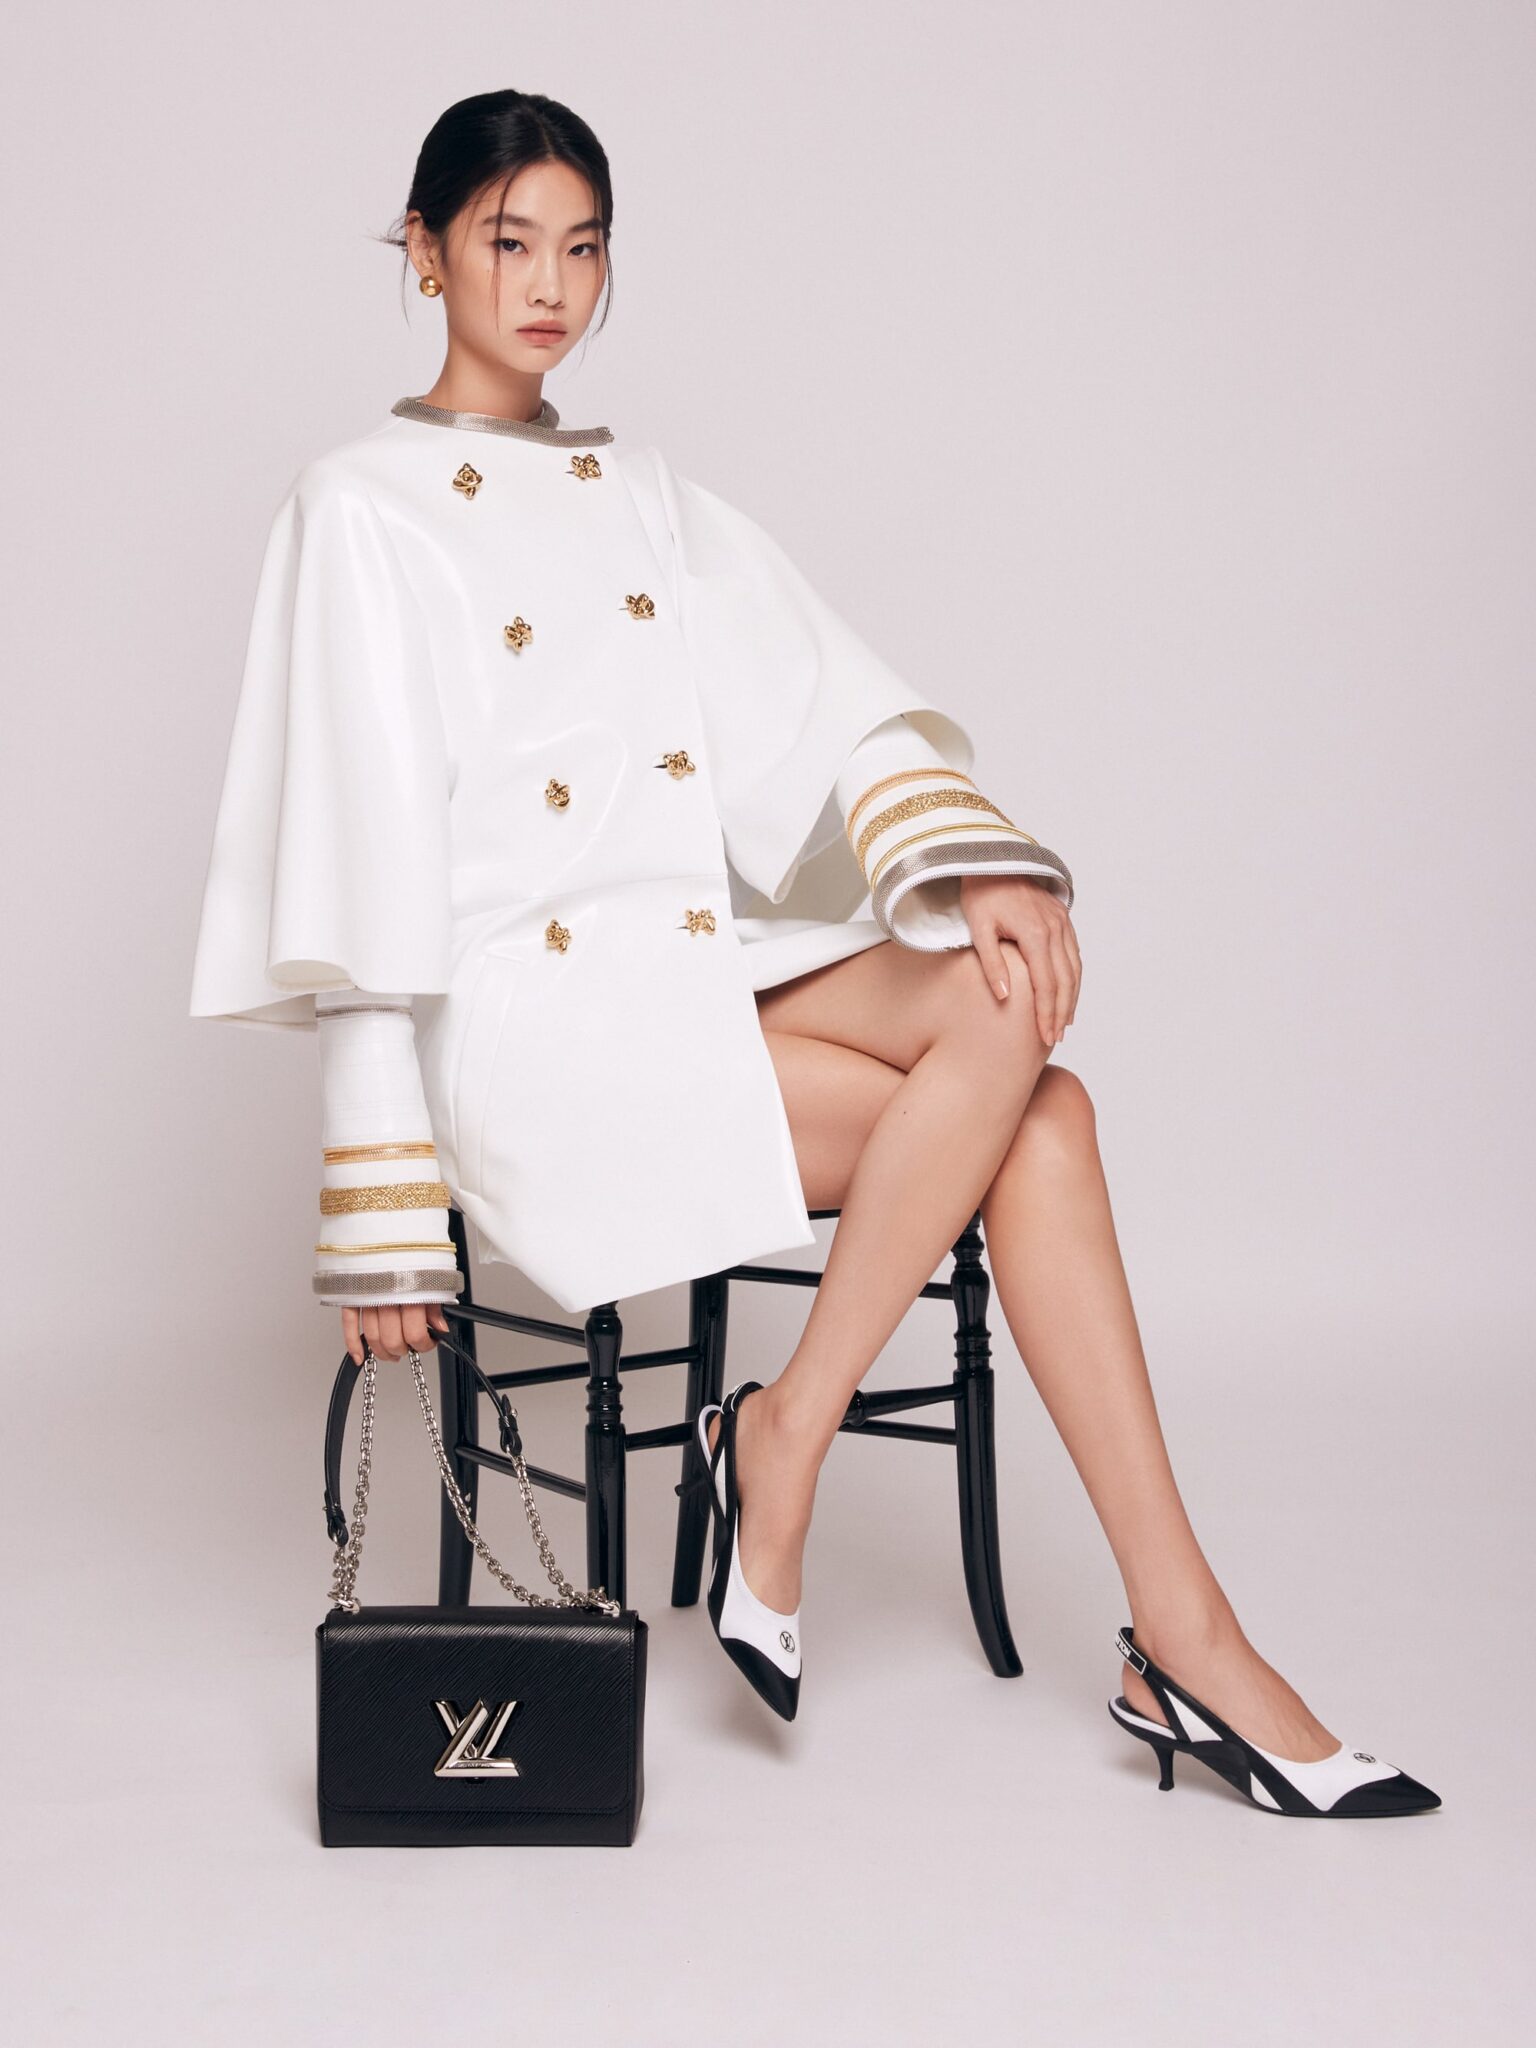 Louis Vuitton Announces Squid Game's HoYeon Jung As Its Ambassador